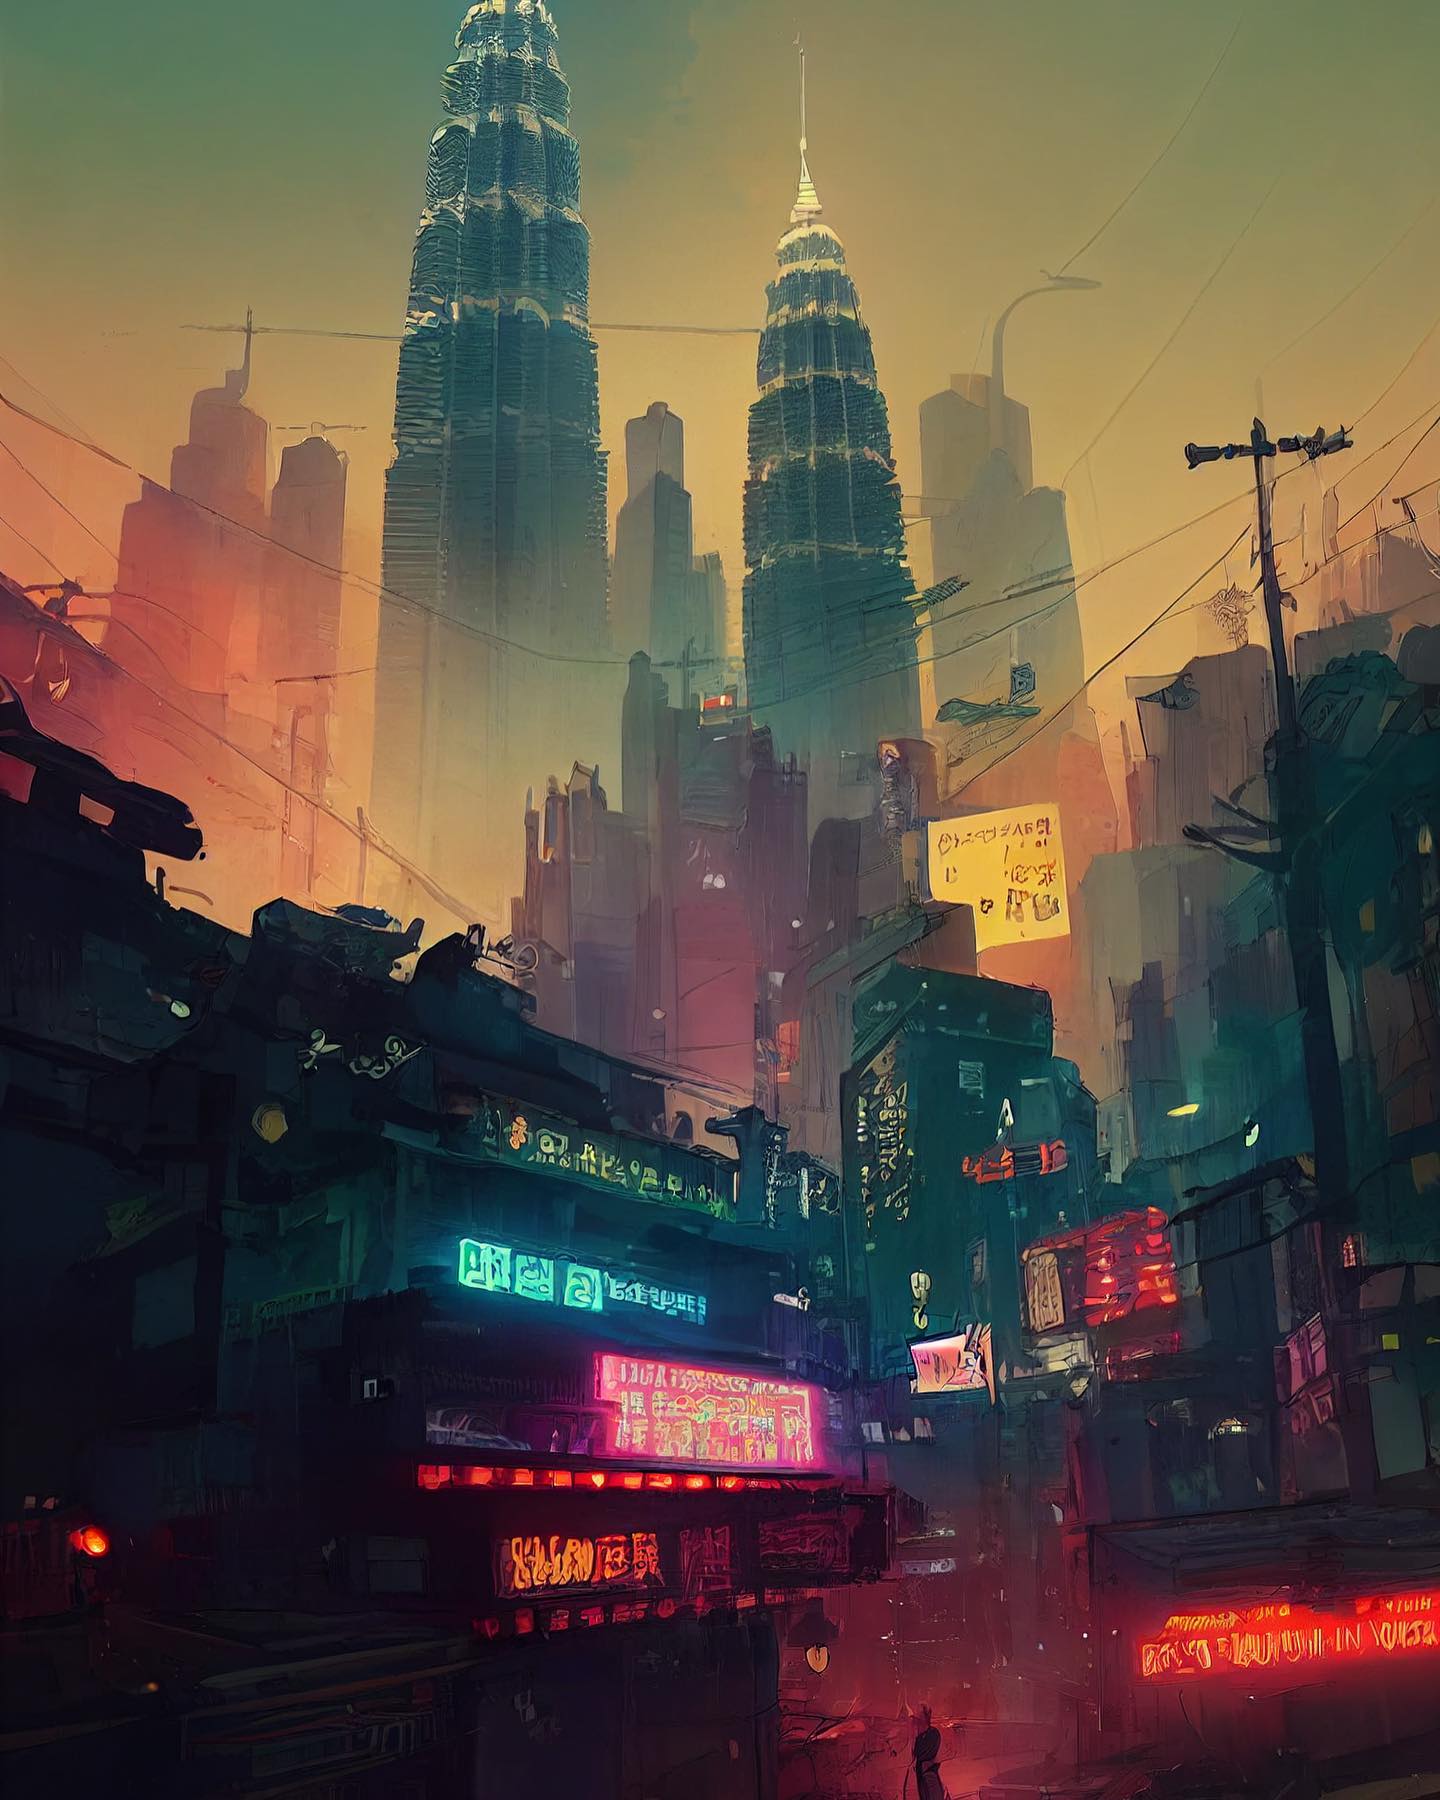 A.I generated artworks show Kuala Lumpur in an alternate cyberpunk reality. Image credit: Fadzlishah Johanabas